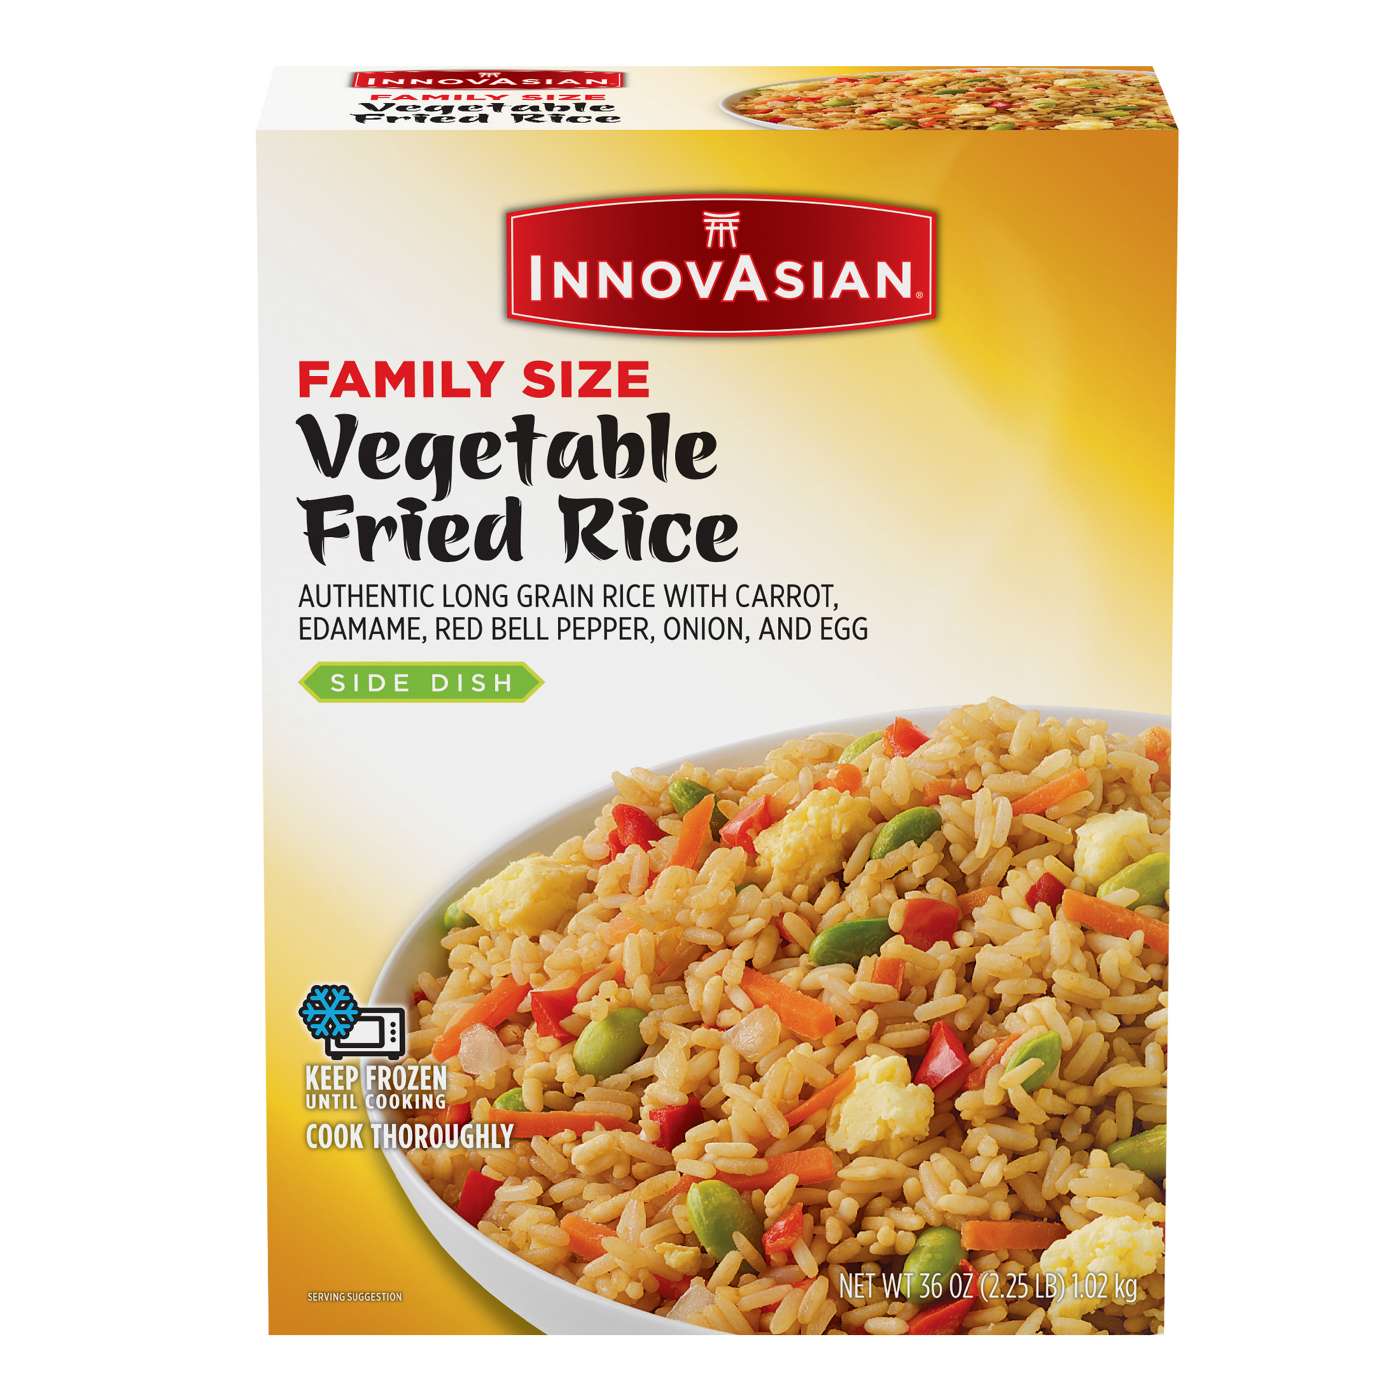 InnovAsian Frozen Vegetable Fried Rice - Family-Size; image 1 of 8